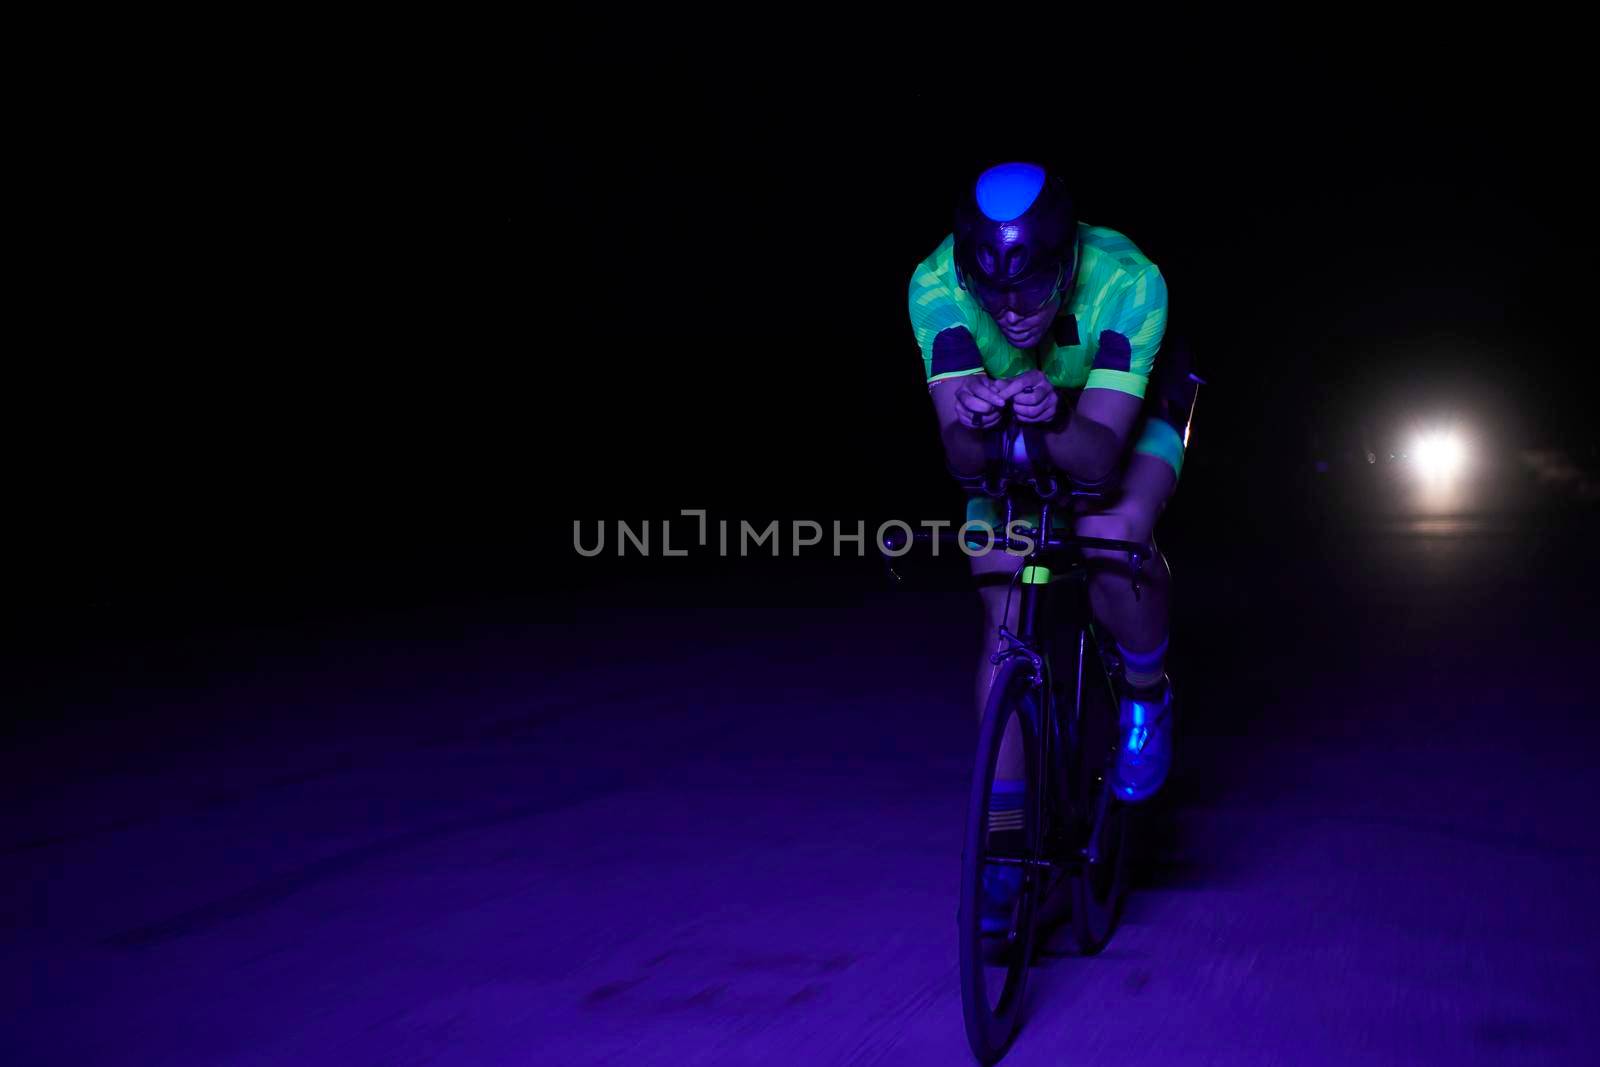 triathlon athlete riding bike fast at night by dotshock